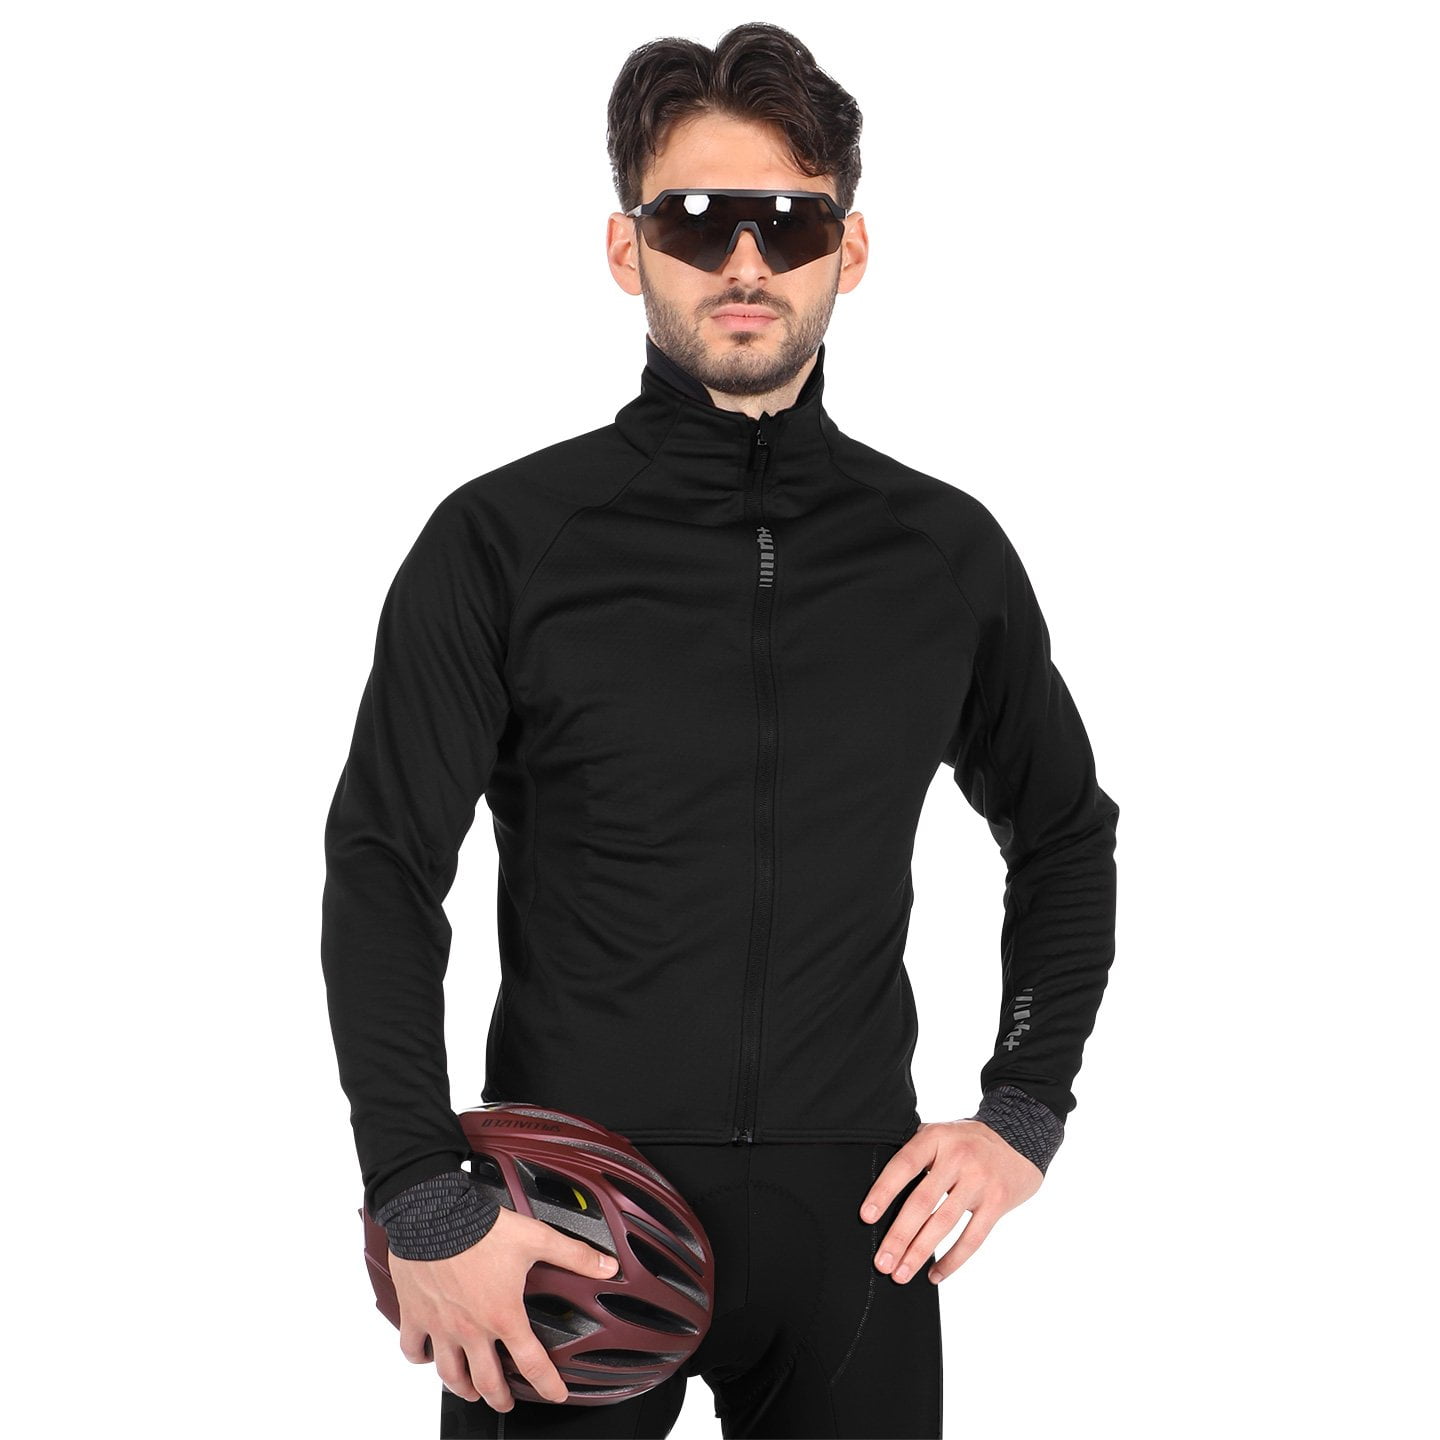 RH+ Gotha Winter Jacket, for men, size XL, Cycle jacket, Cycle gear